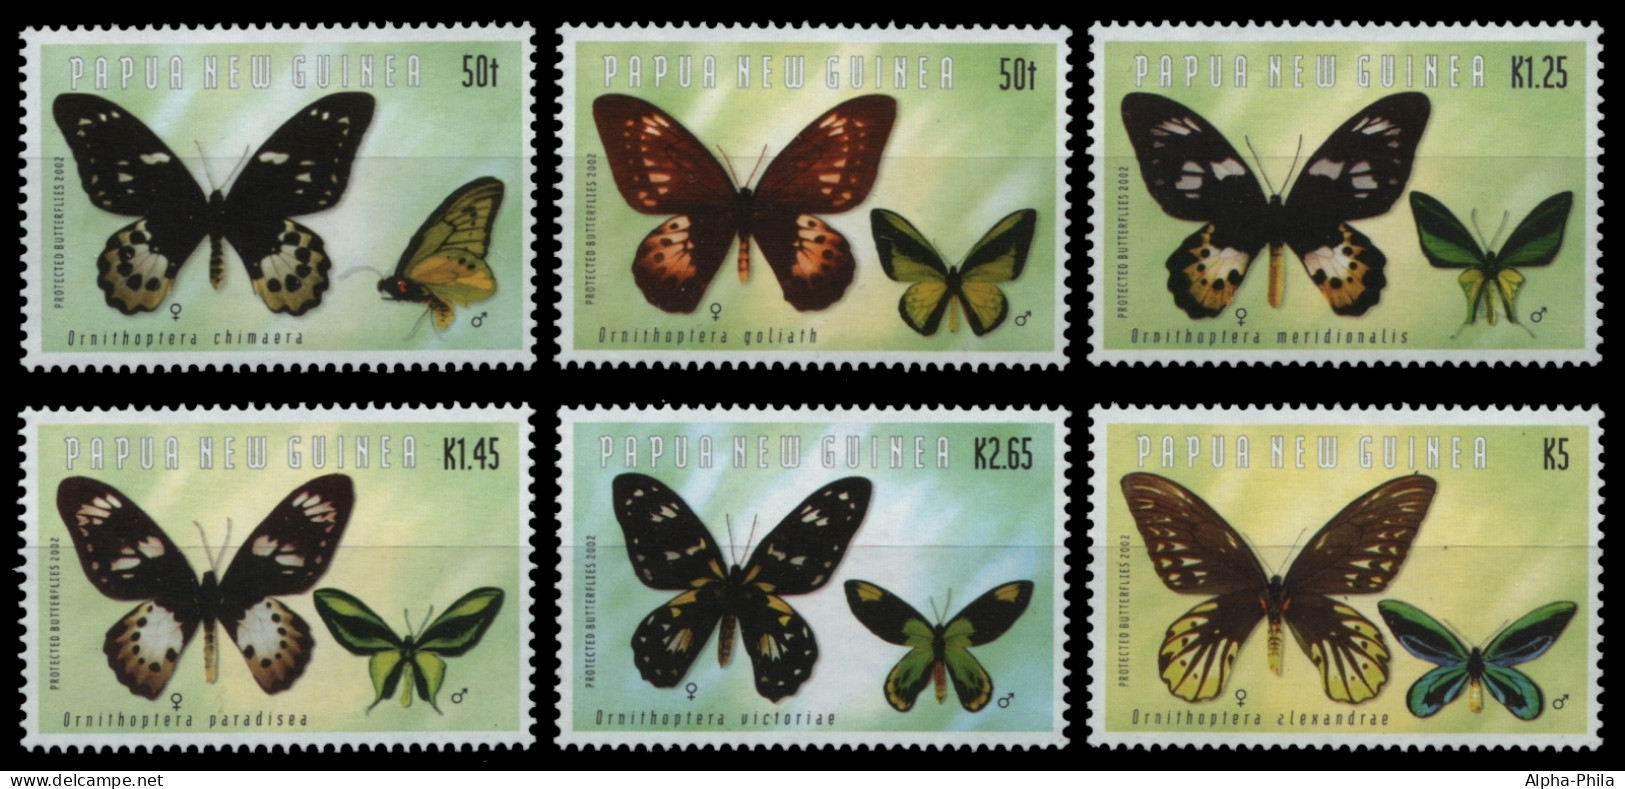 Papua-Neuguinea 2002 - Mi-Nr. 955-960 ** - MNH - Schmetterlinge / Butterflies - Papua New Guinea